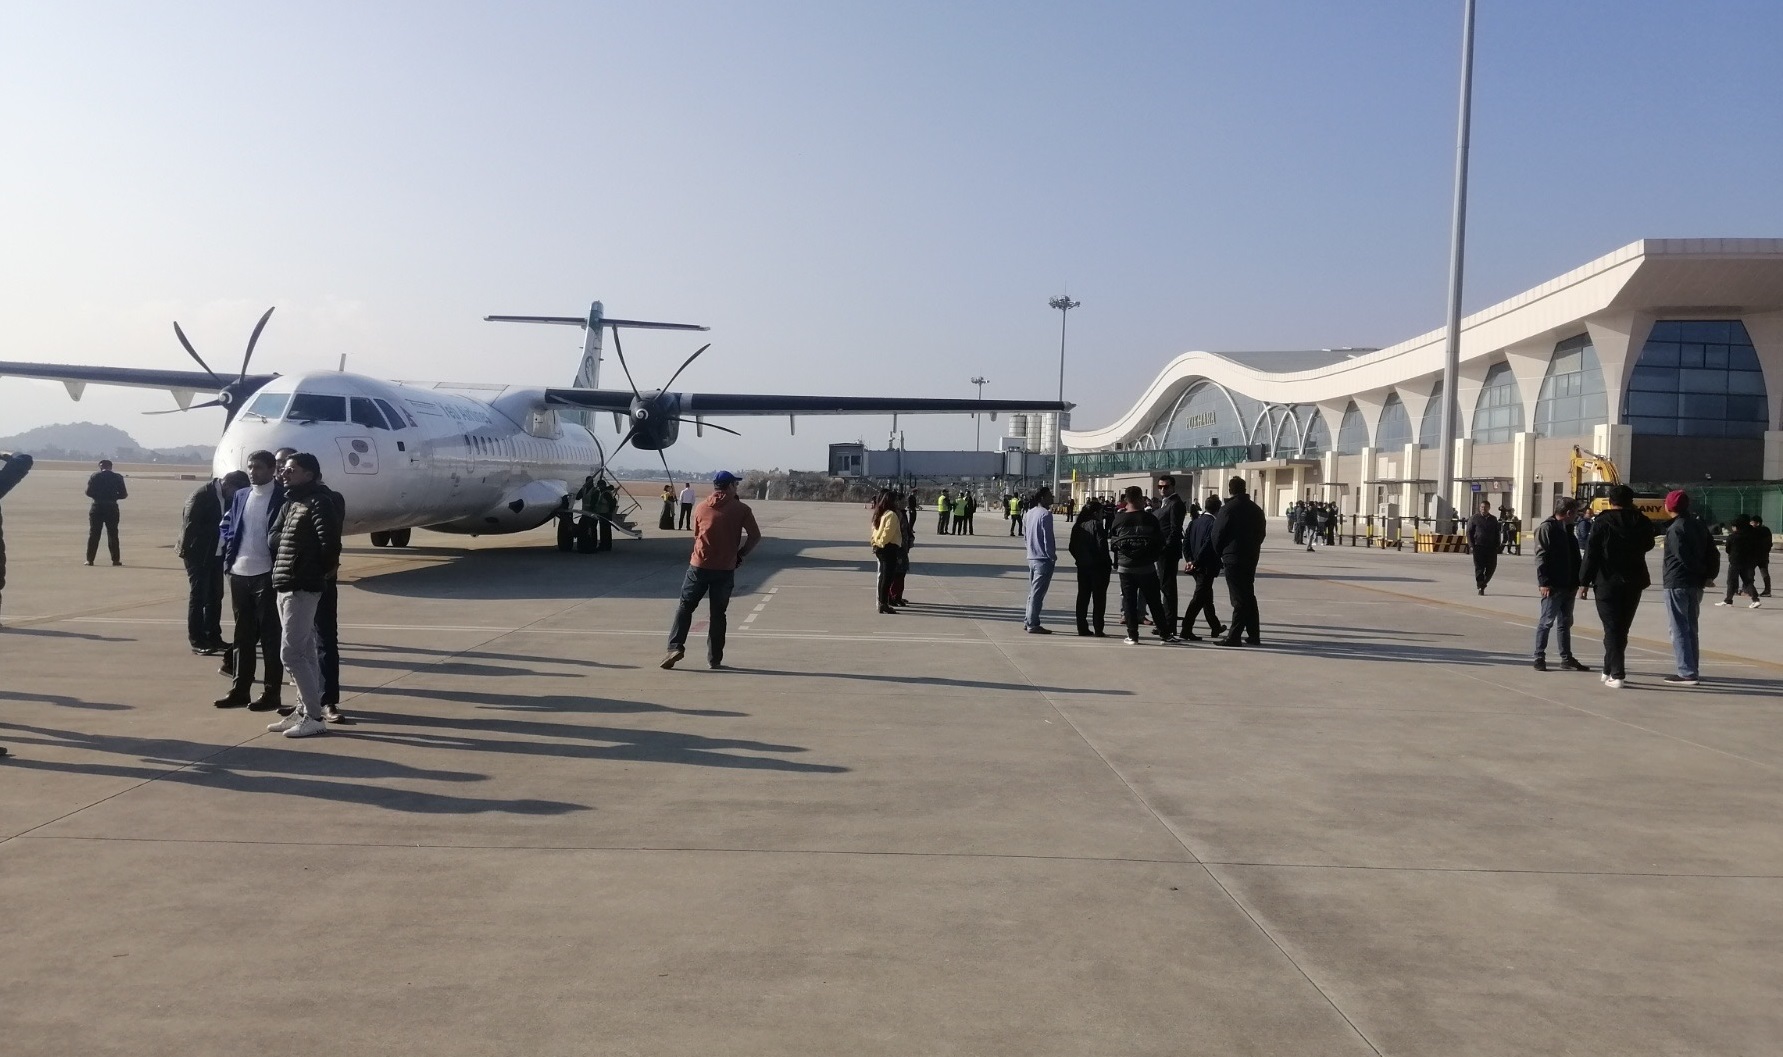 pokhara international airport